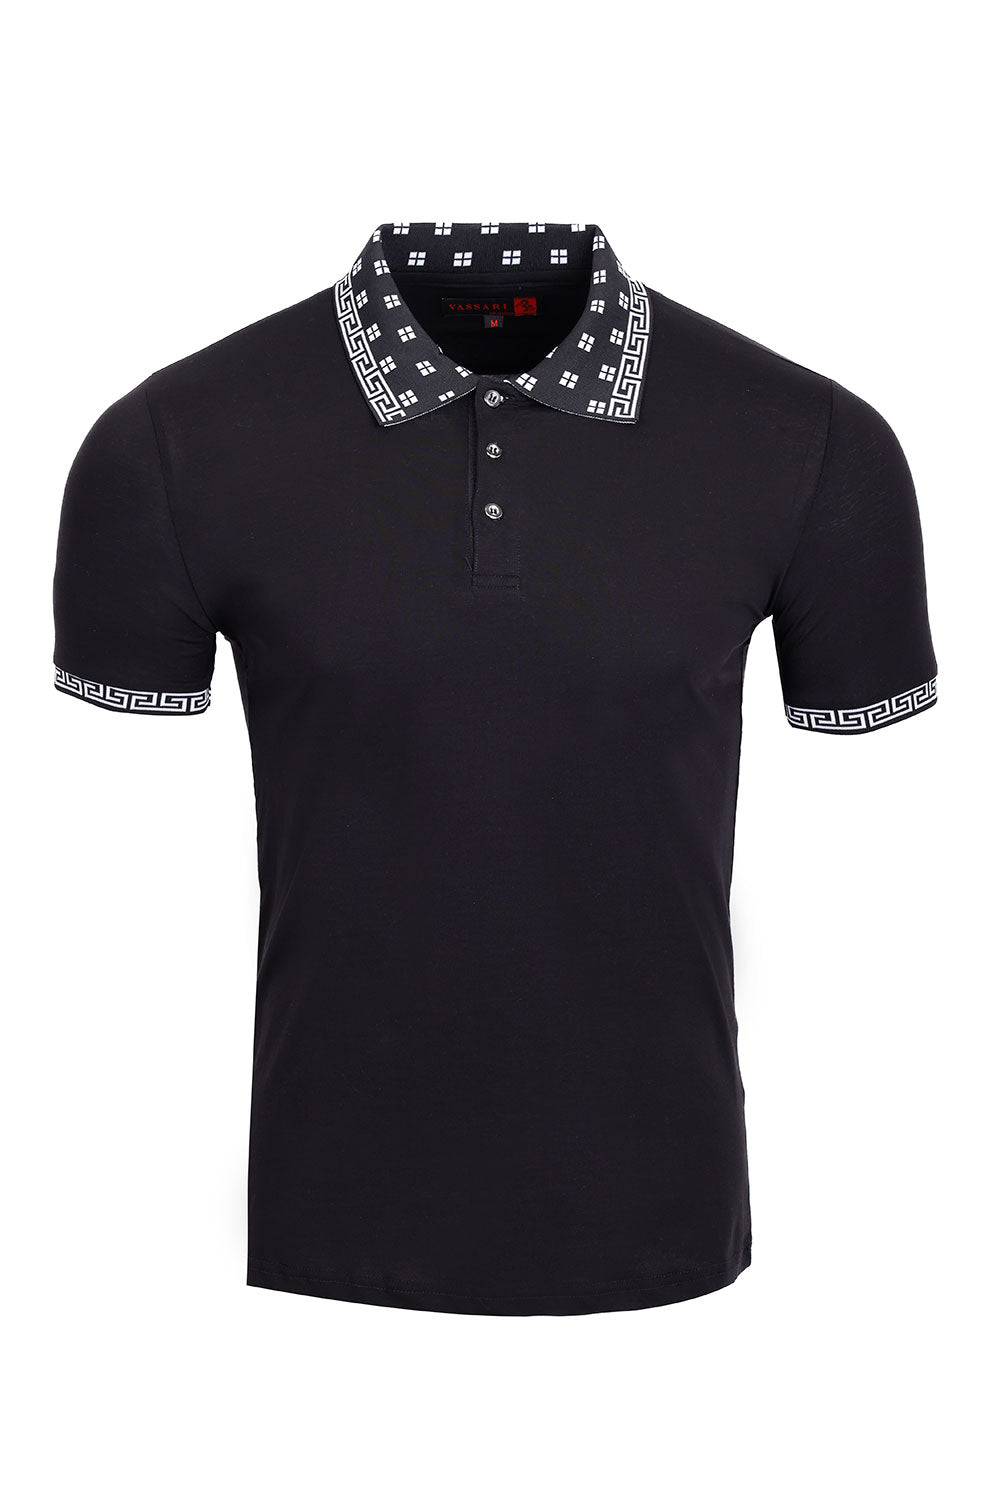 Vassari Men's Greek Key Checkered Stretch Polo Shirts 3VP632 Black